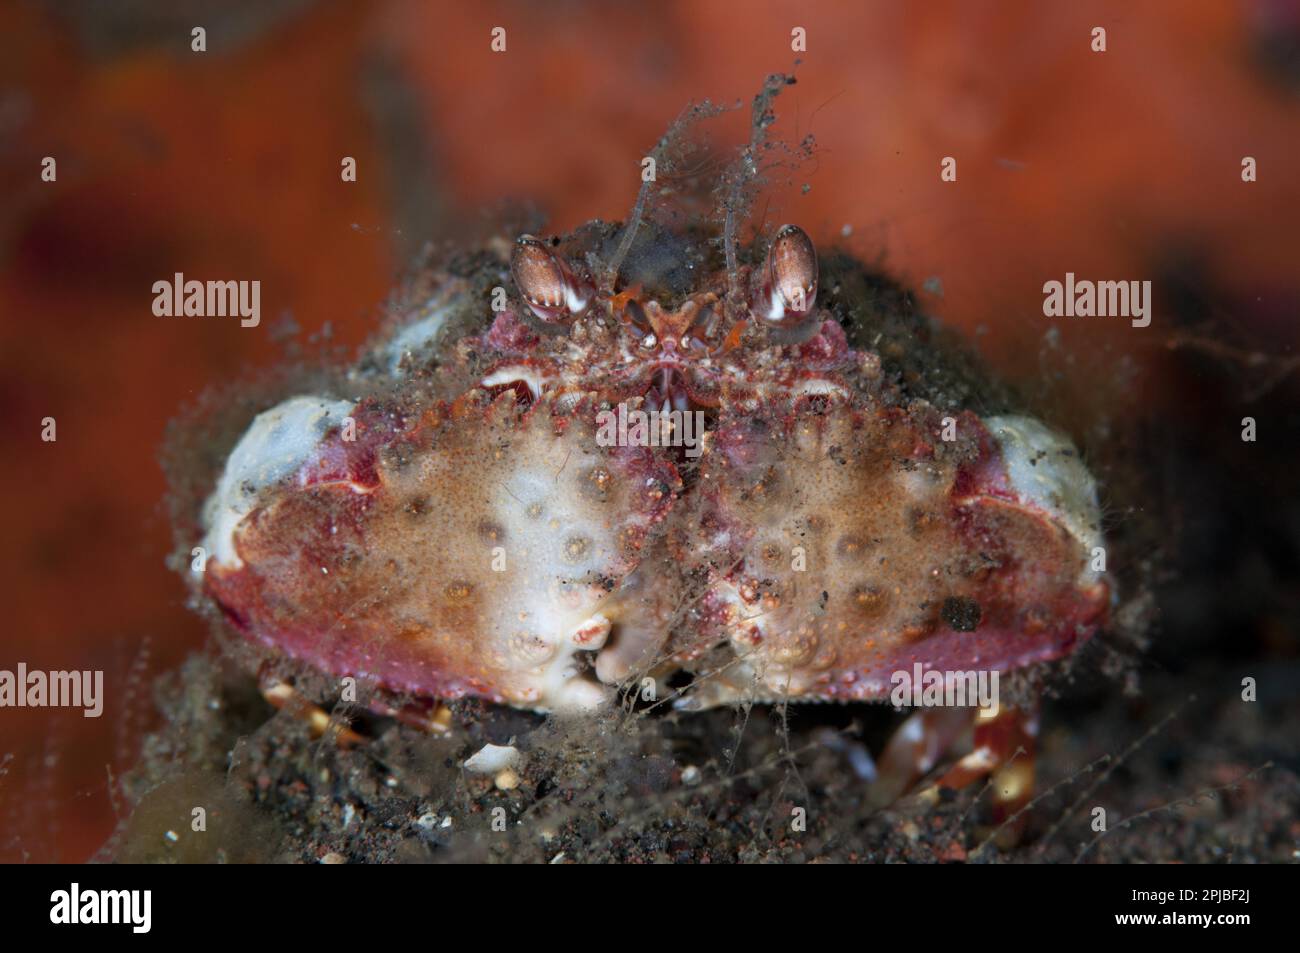 Adult two-horned box crab (Calappa bicornis) resting on black sand, Seraya, Bali, Lesser Sunda Islands, Indonesia Stock Photo